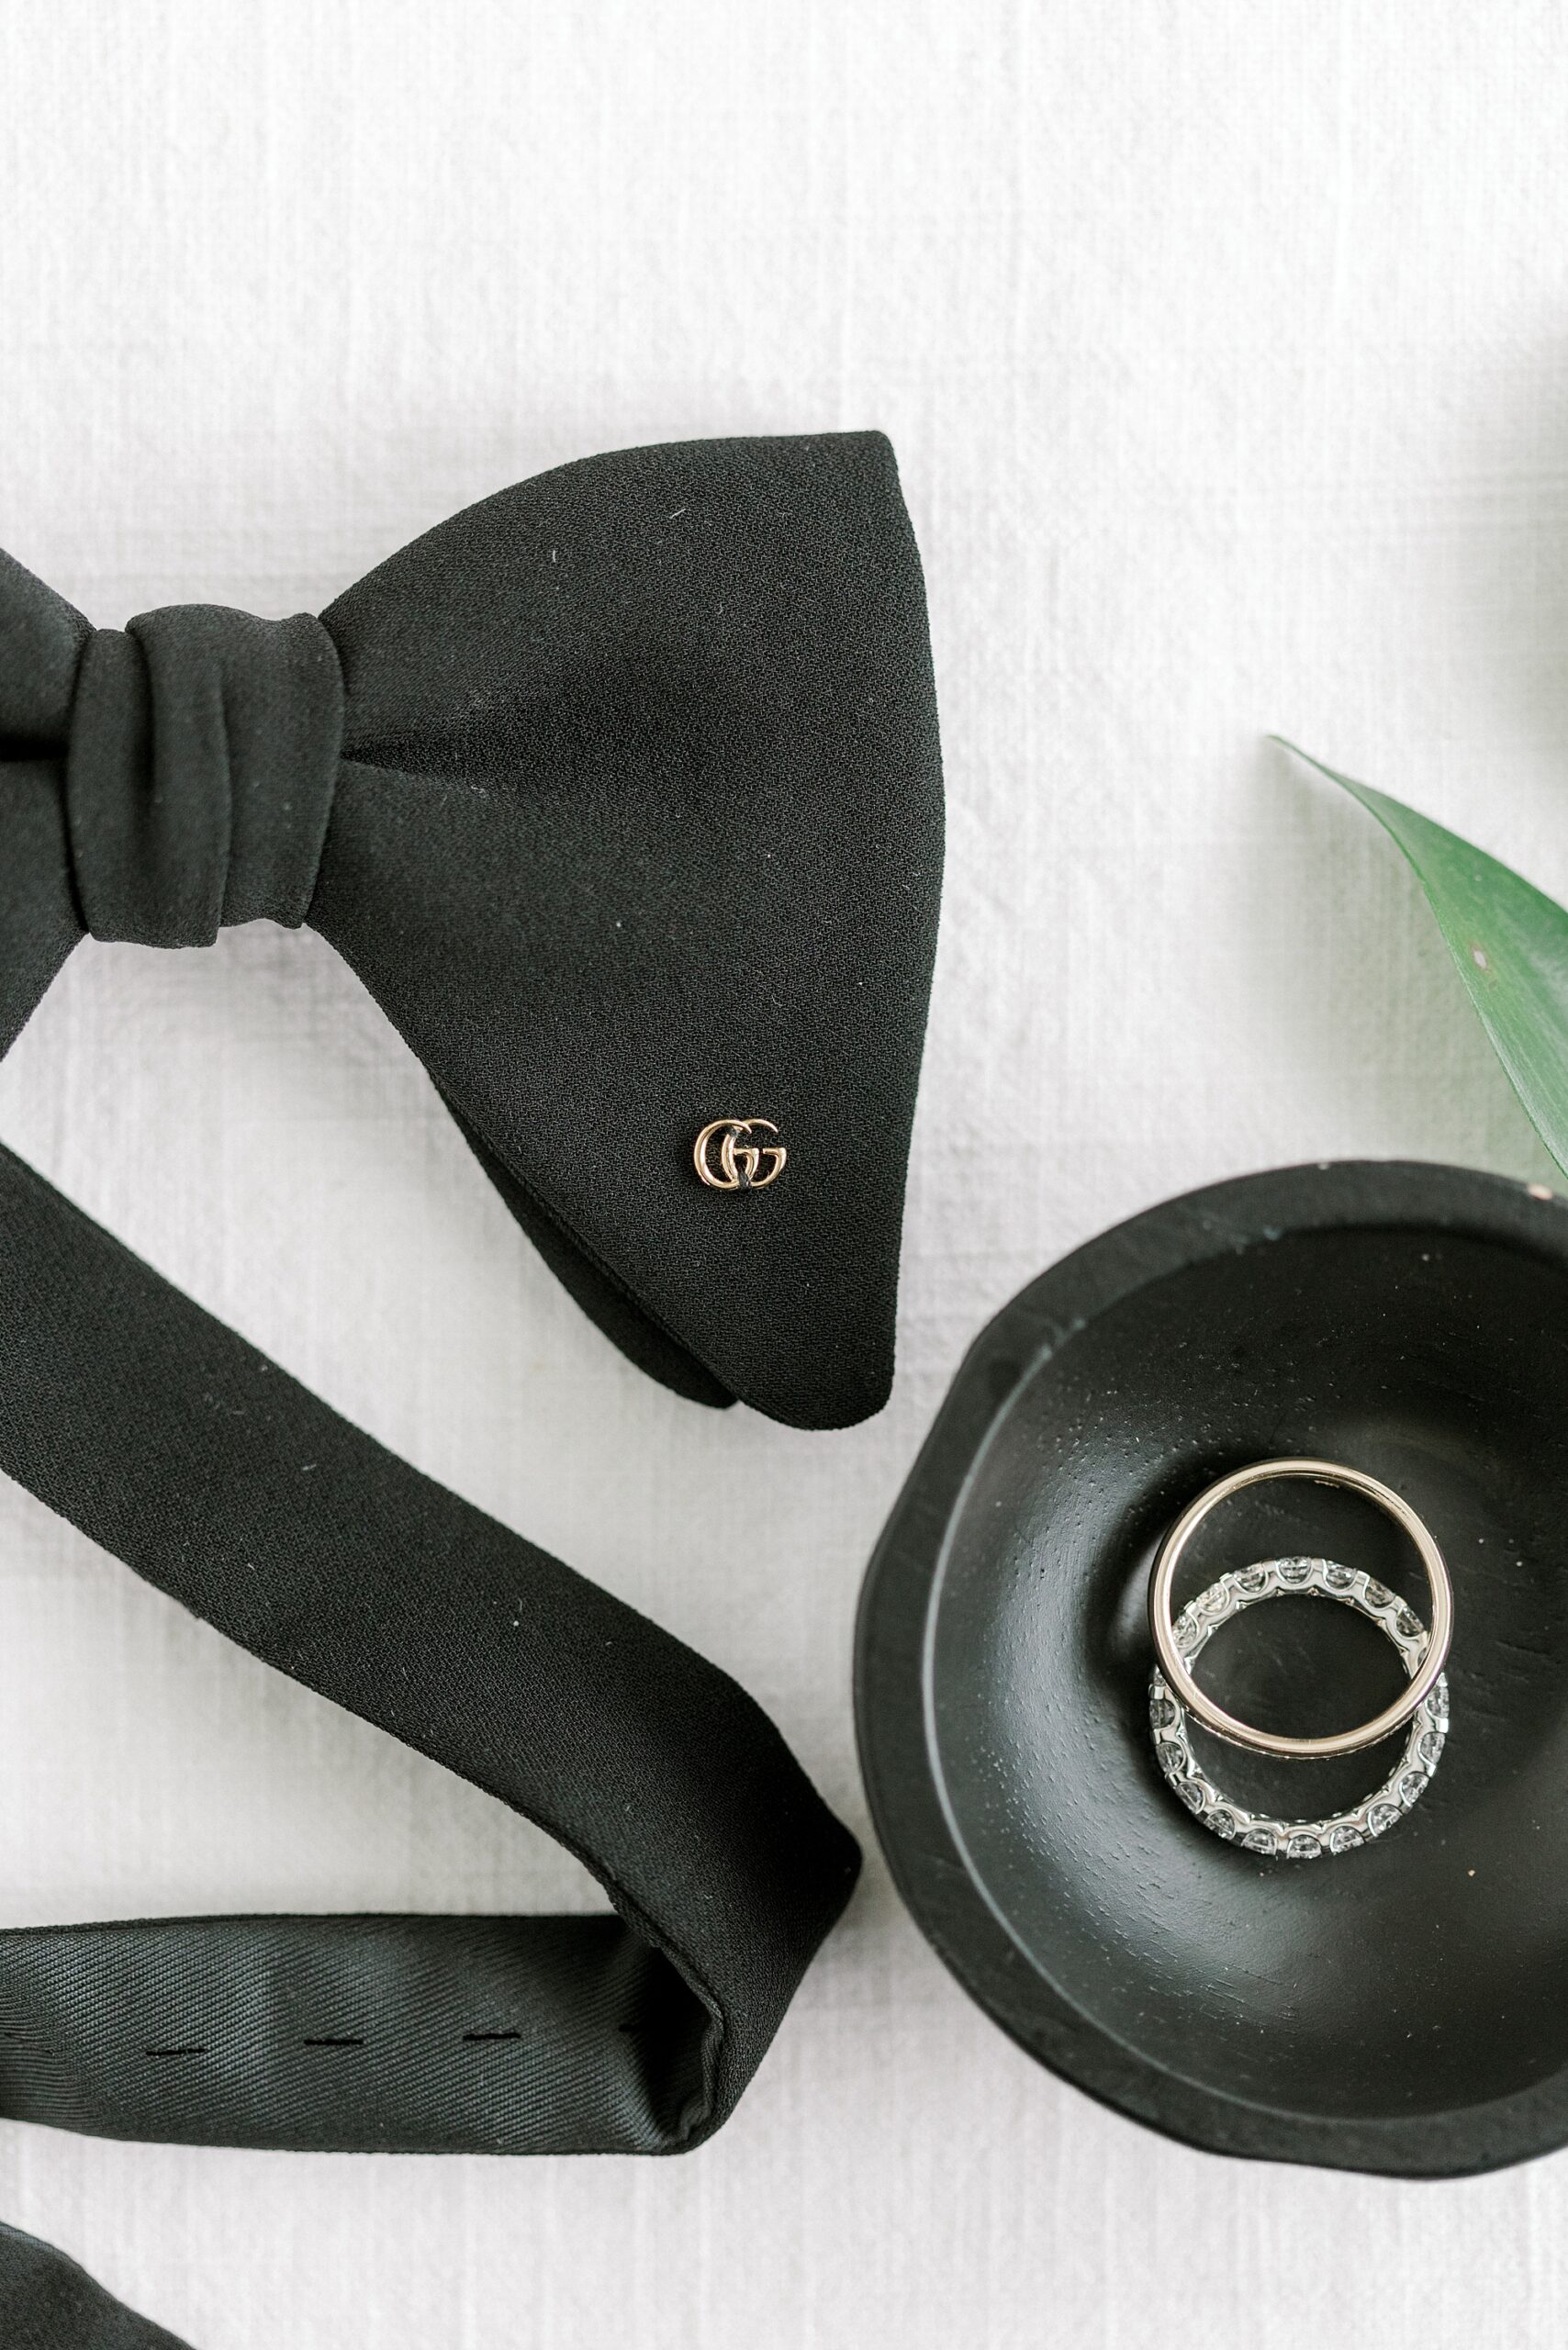 groom's black bow tie and rings in black bowl